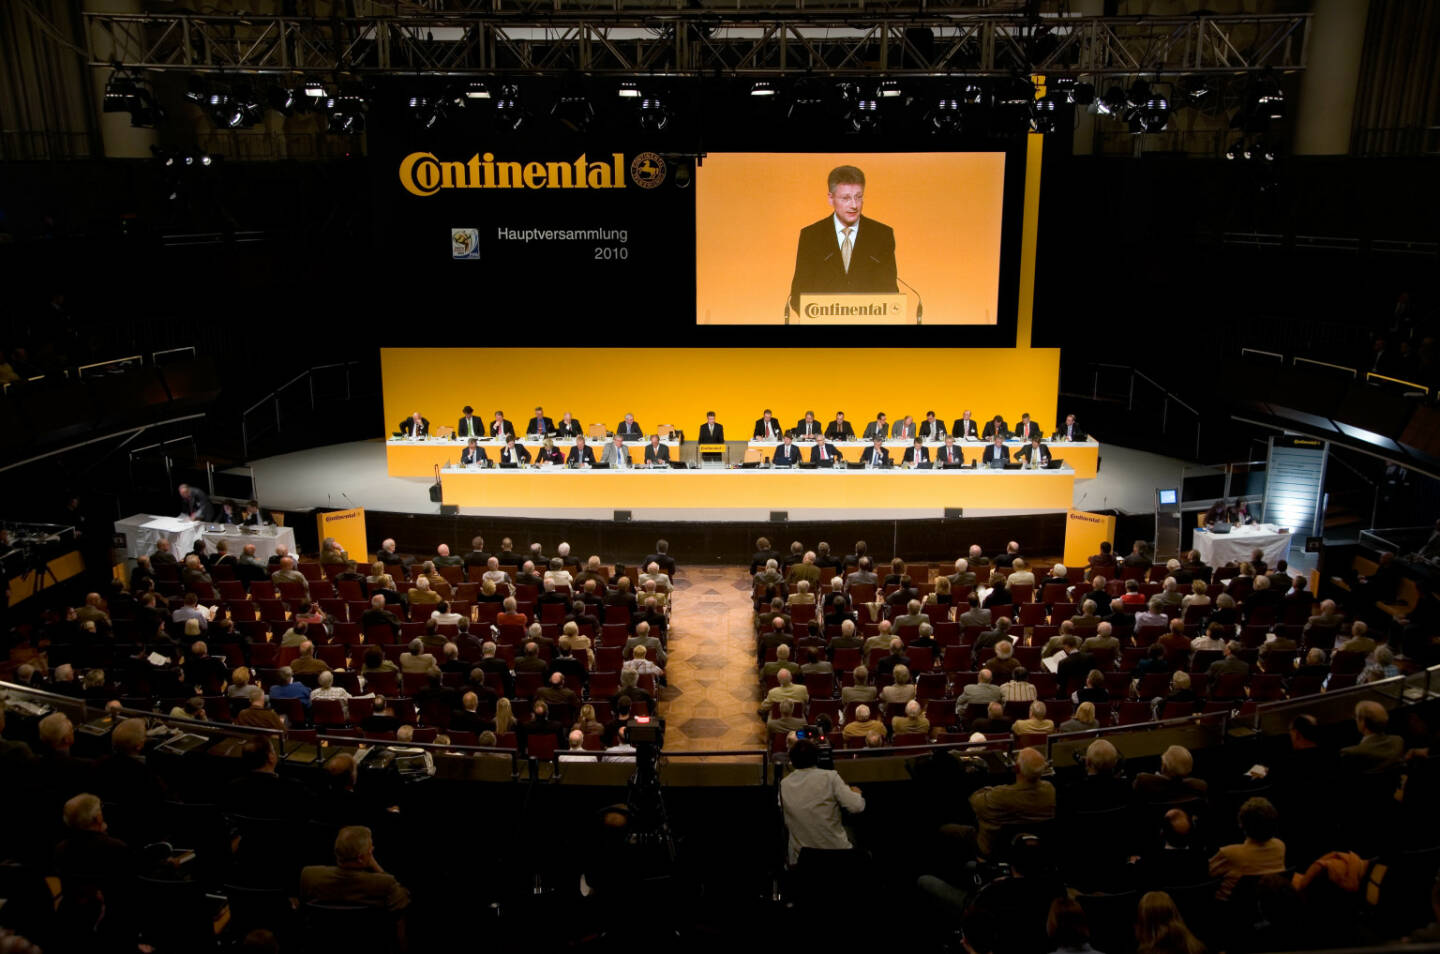 Die Hauptversammlung 2010 der Continental AG fand am 28. April im Kuppelsaal/Congress Centrum Hannover statt. 